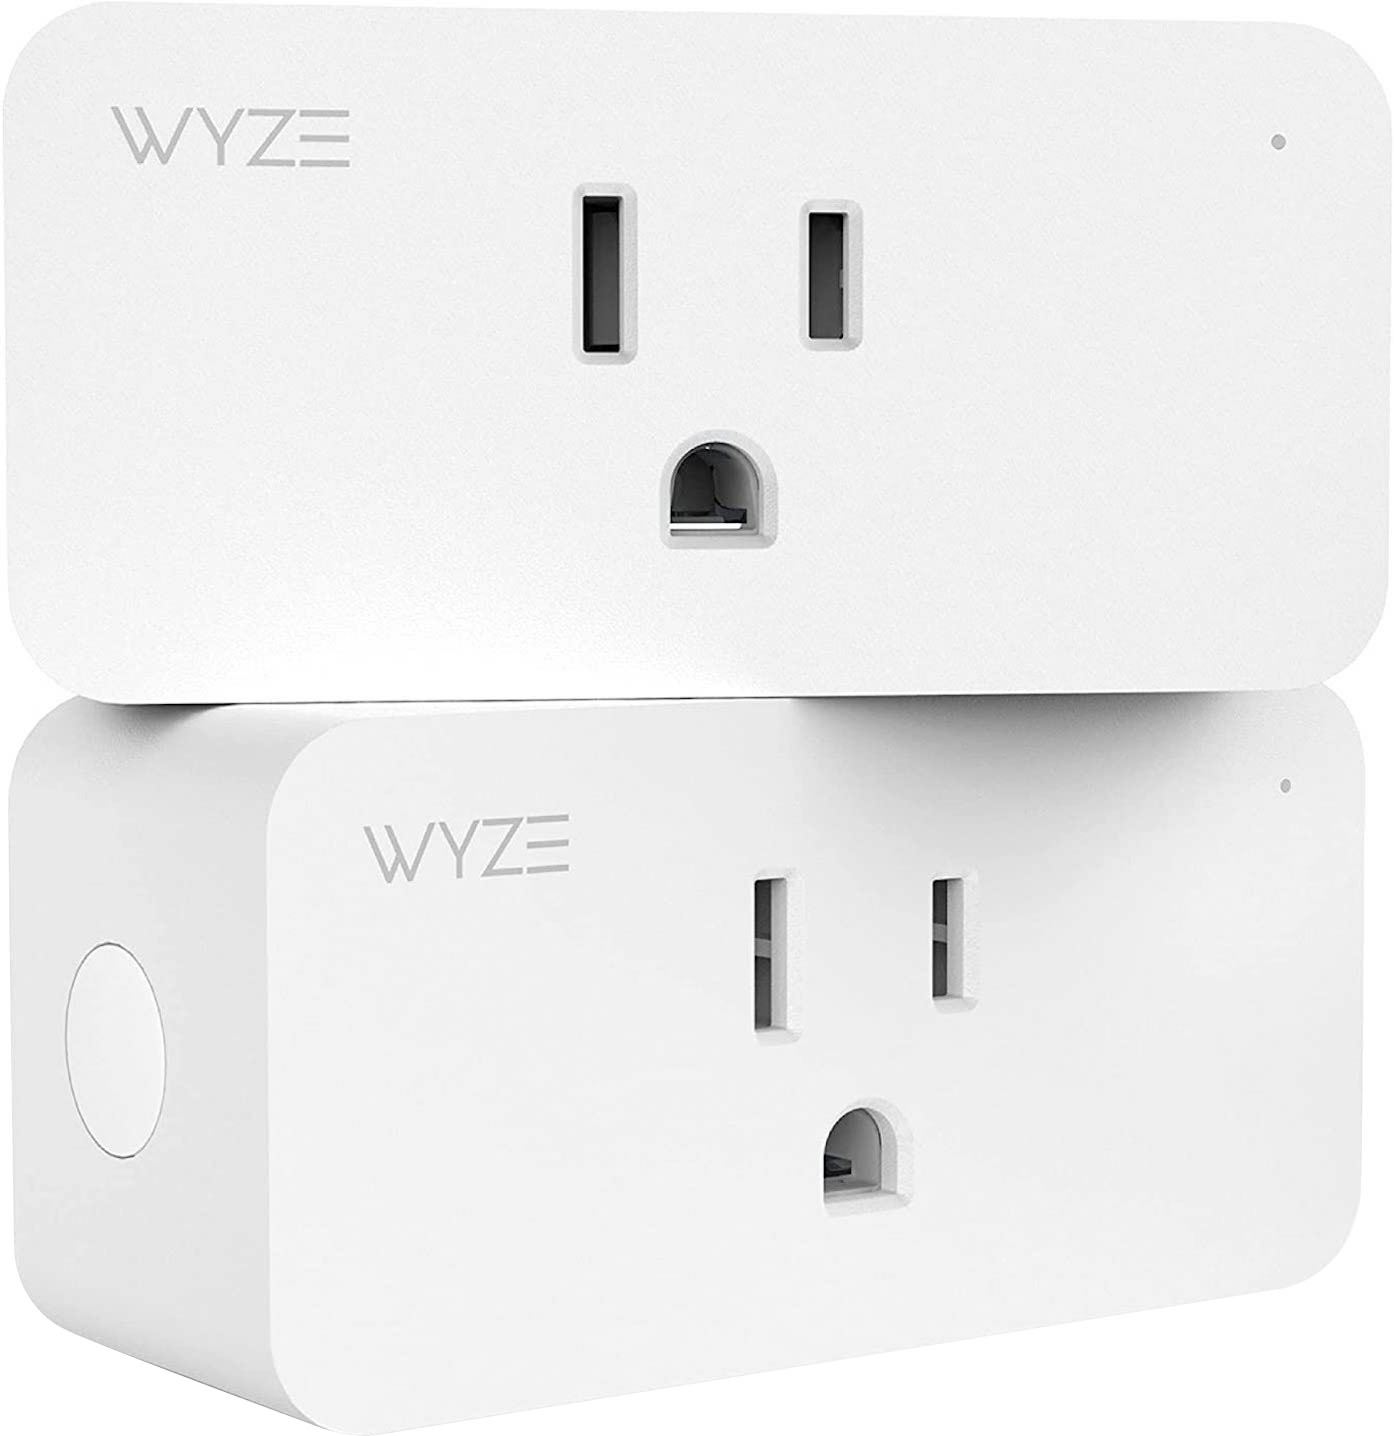 Wi-Fi Smart Plug - Indoor Wi-Fi Control by Westinghouse at Fleet Farm